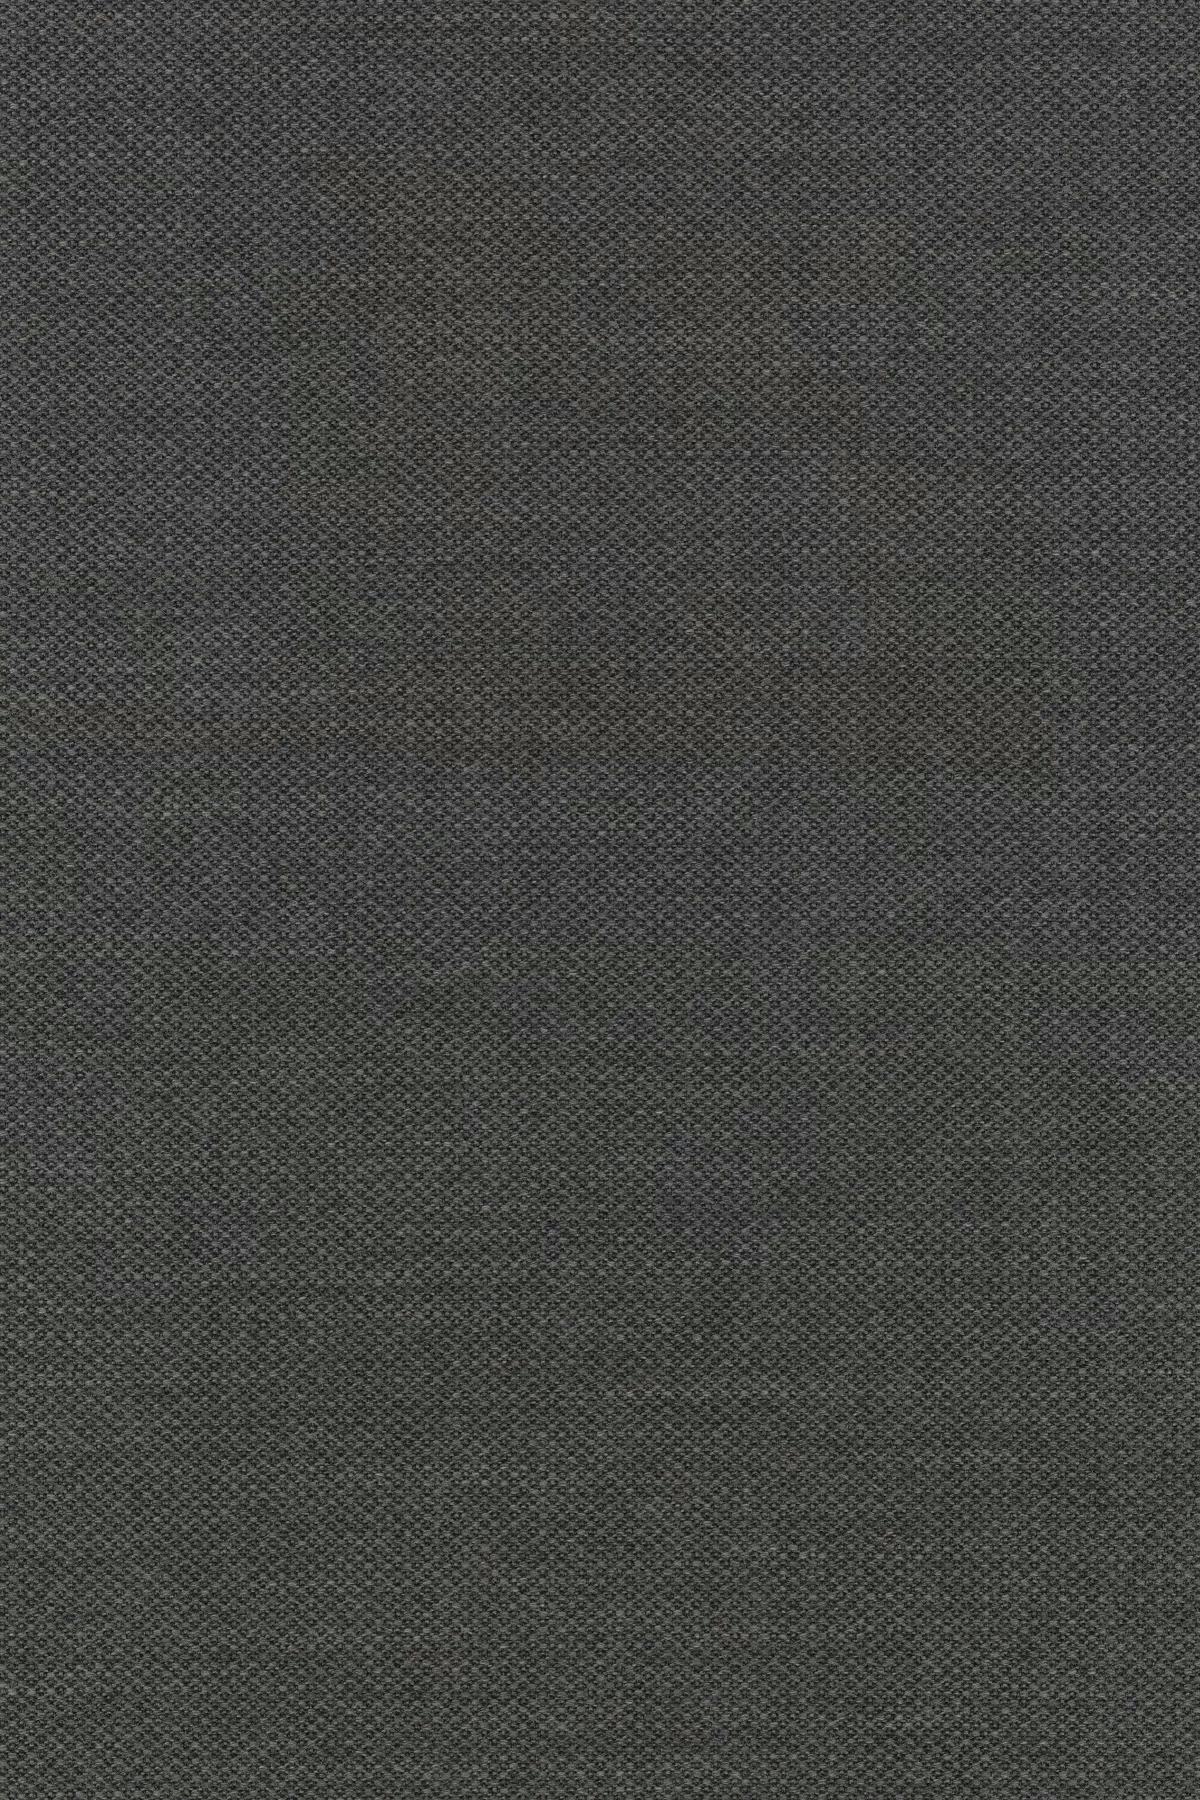 Fabric sample Fiord 171 grey